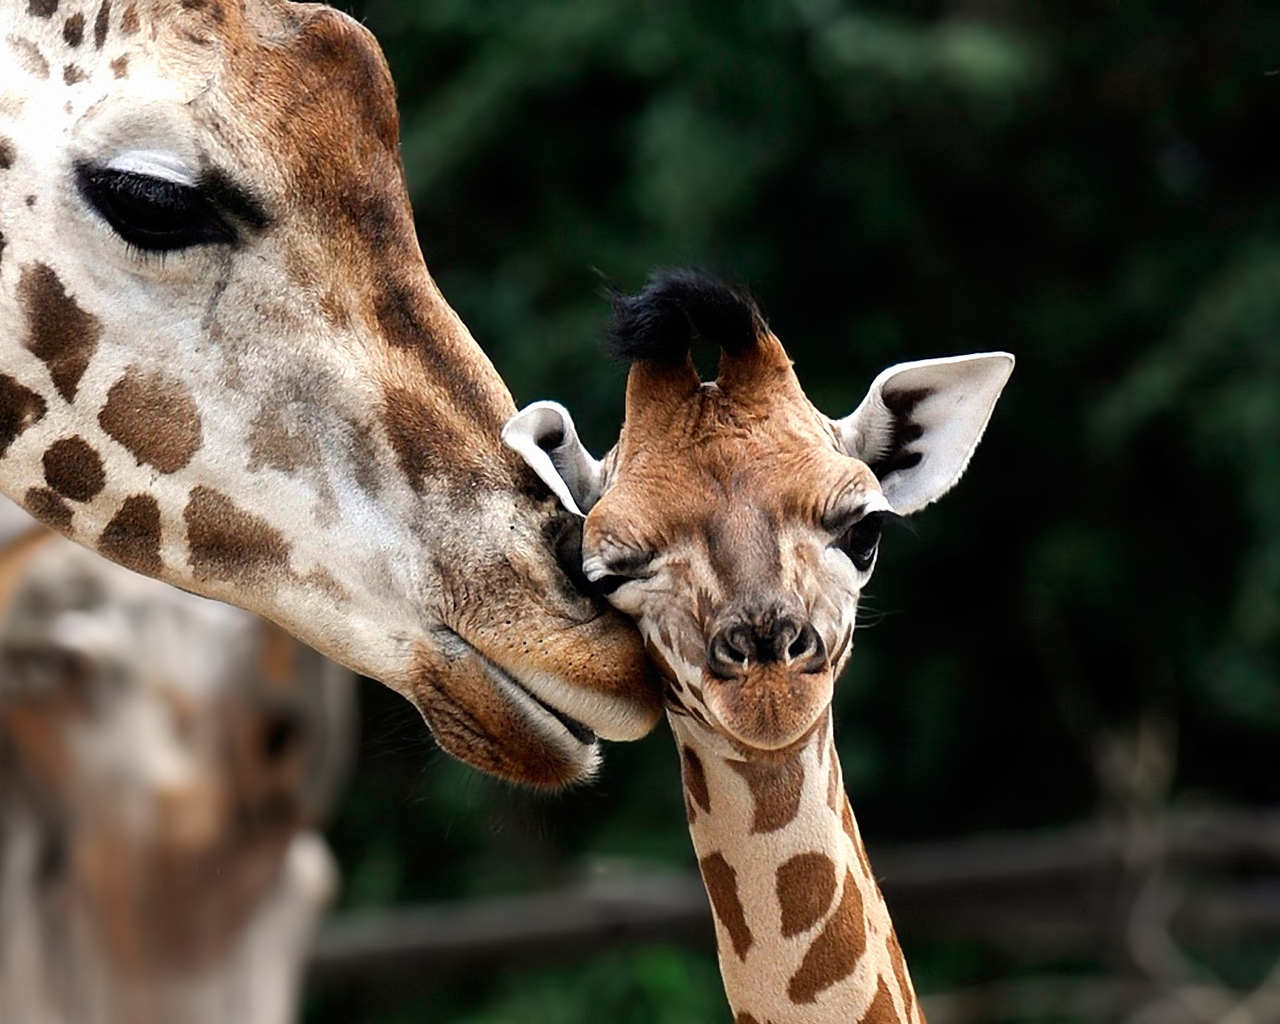 Giraffe Love for 1280 x 1024 resolution